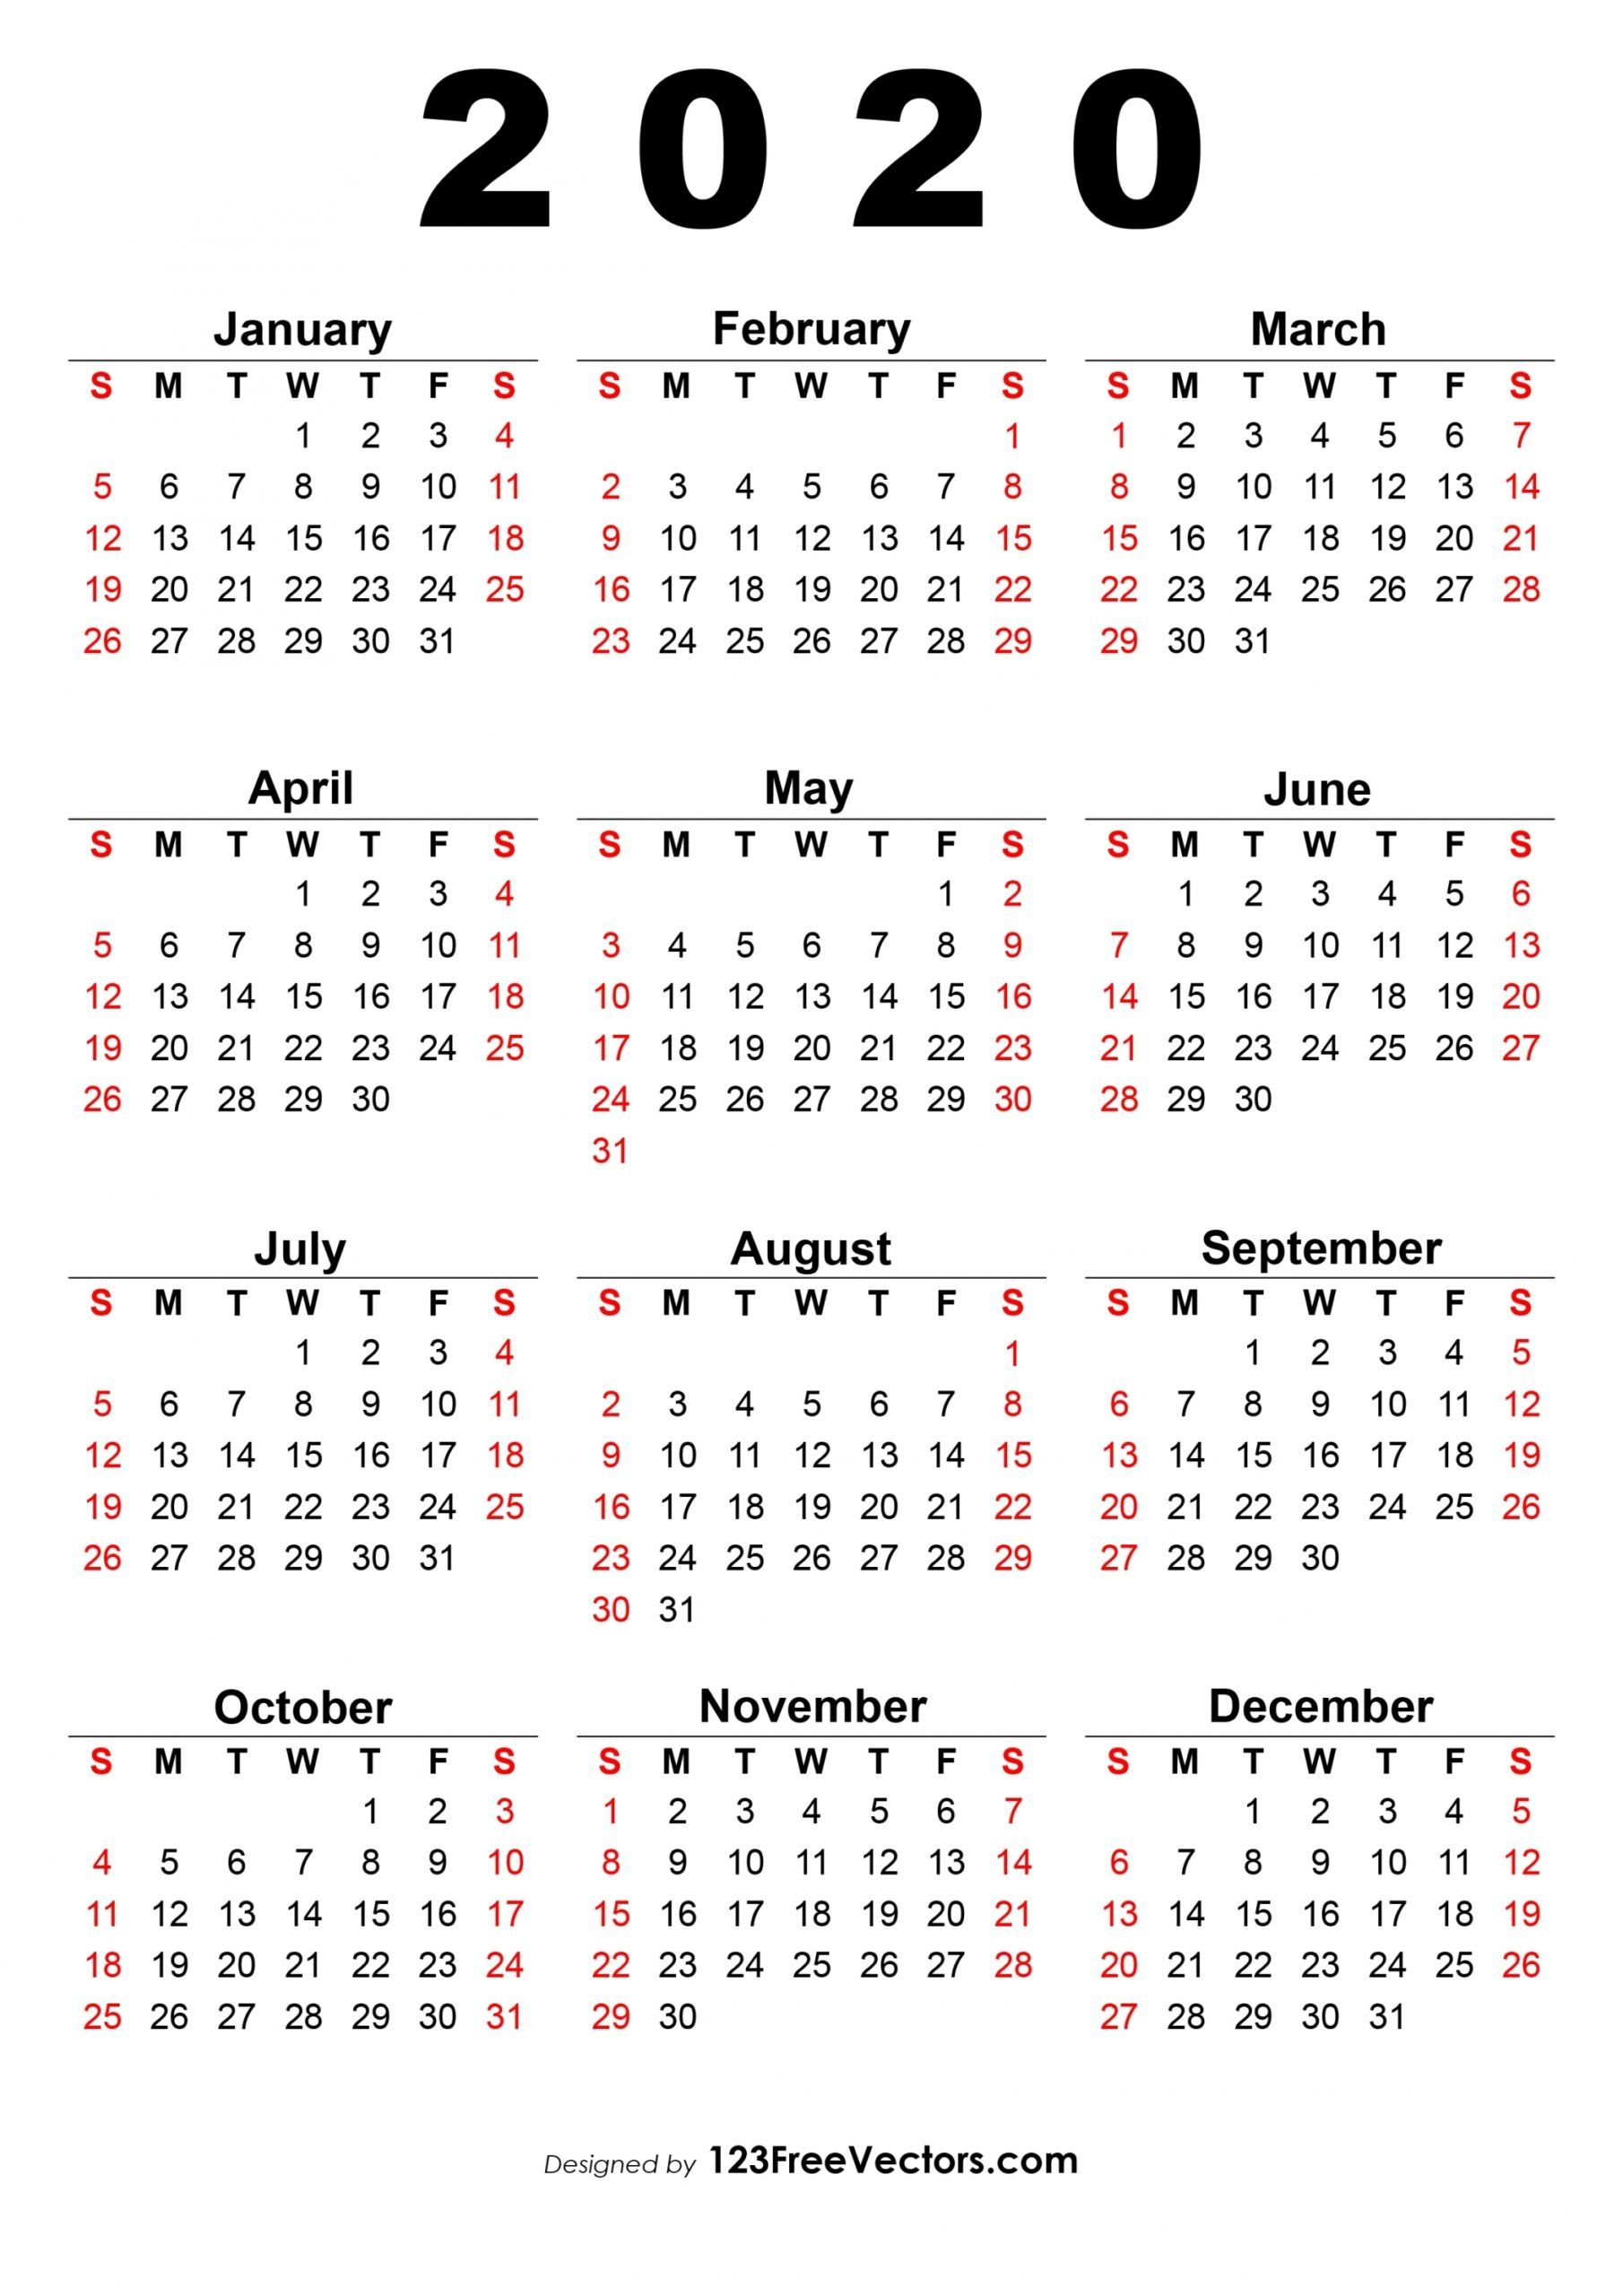 123Freevectors 2022 Calendar Printing Tips For 2022 Calendar